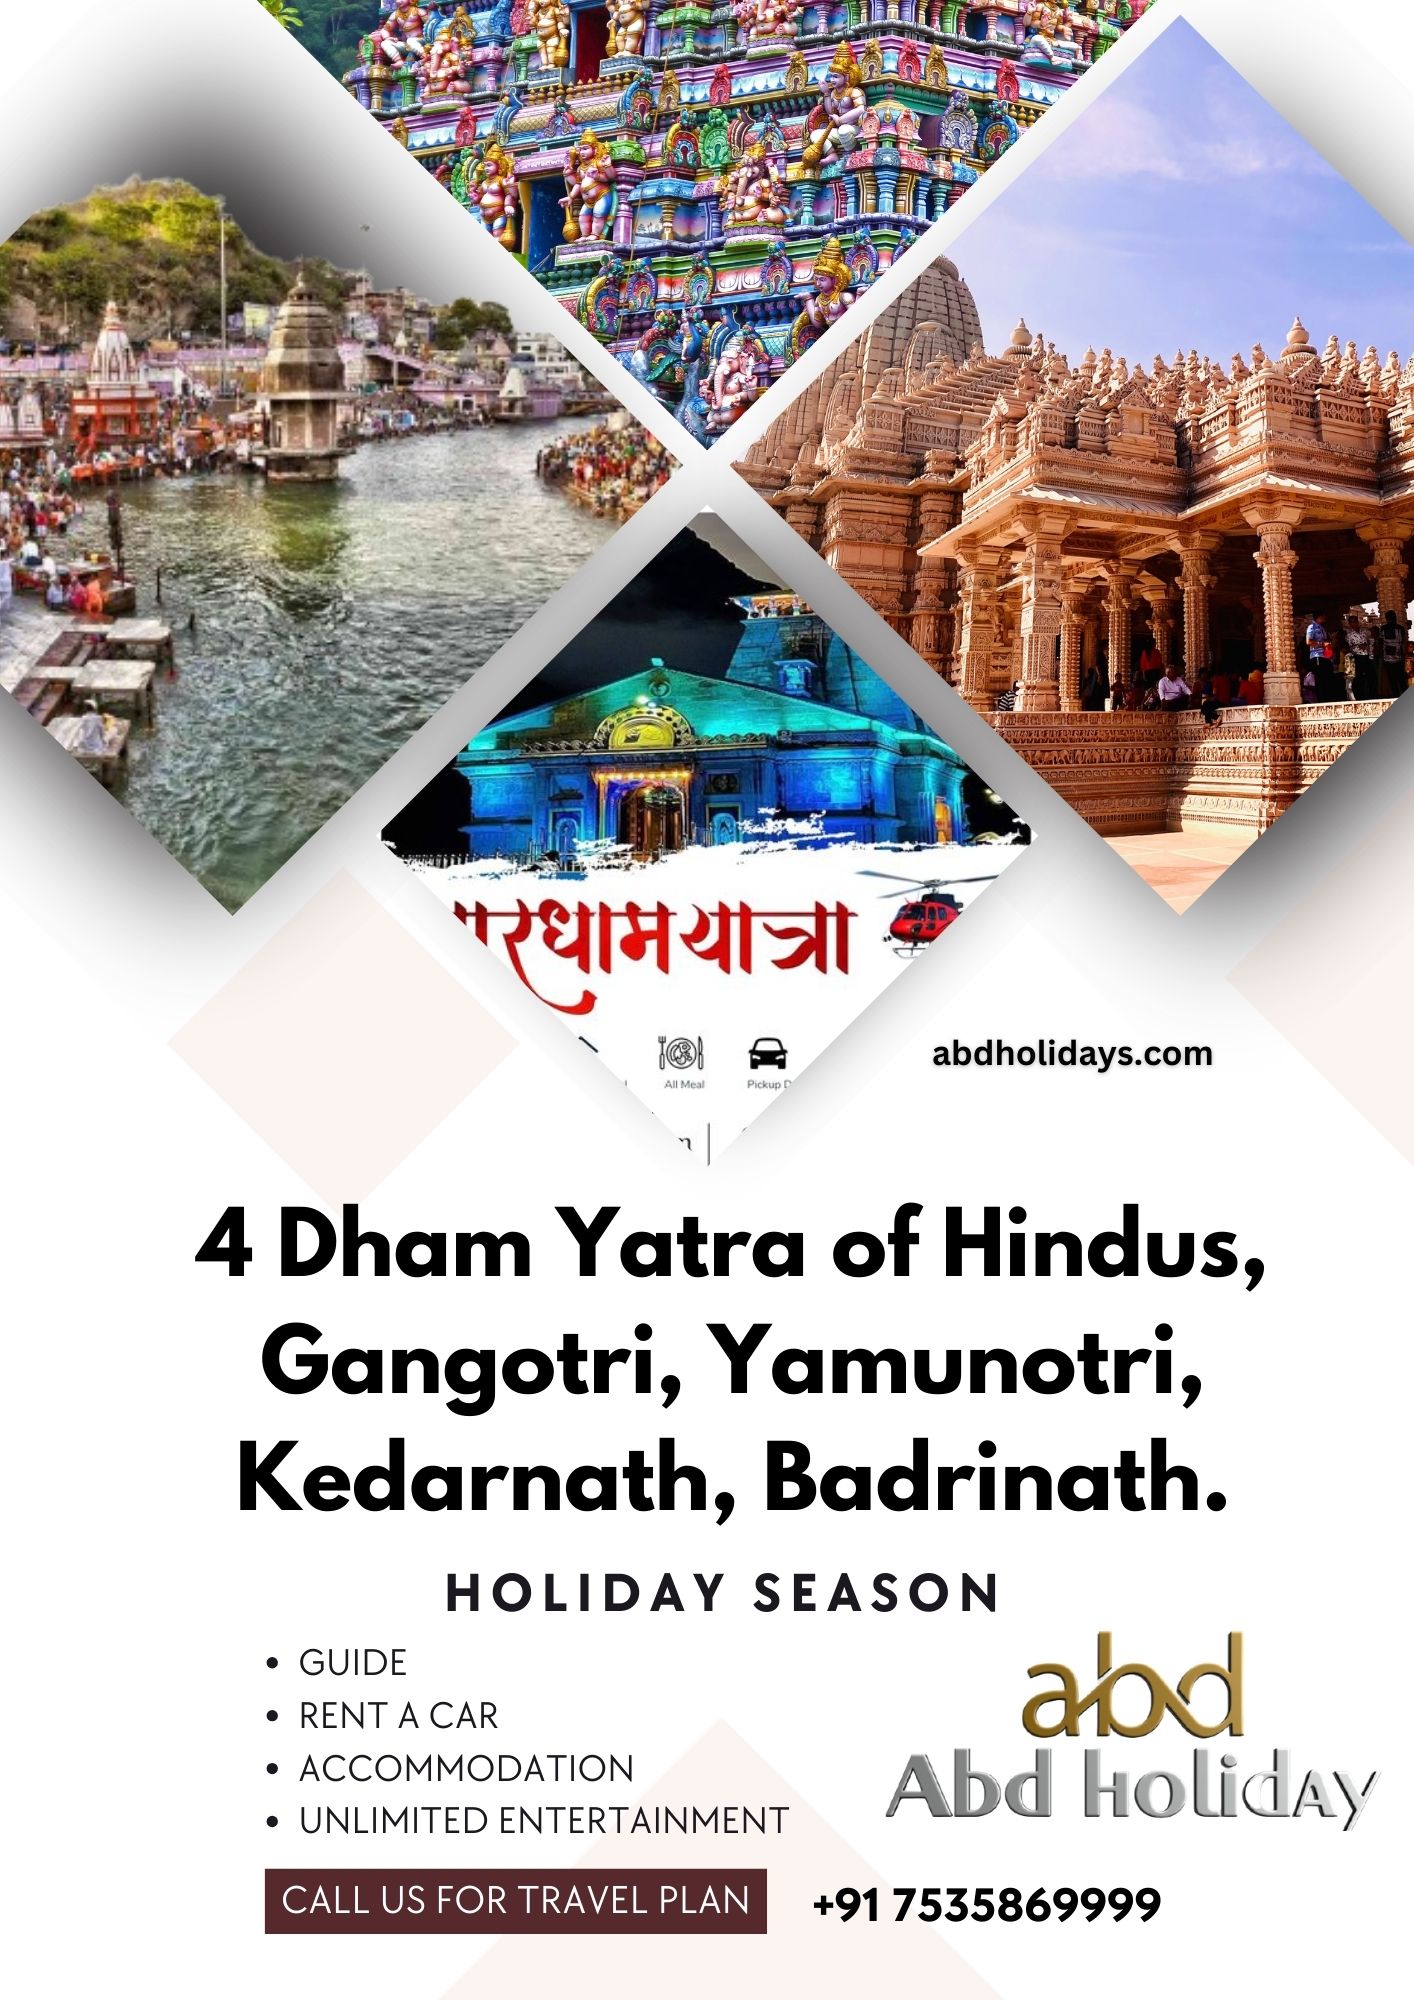 4 Dham Yatra of Hindus, Gangotri, Yamunotri, Kedarnath, Badrinath